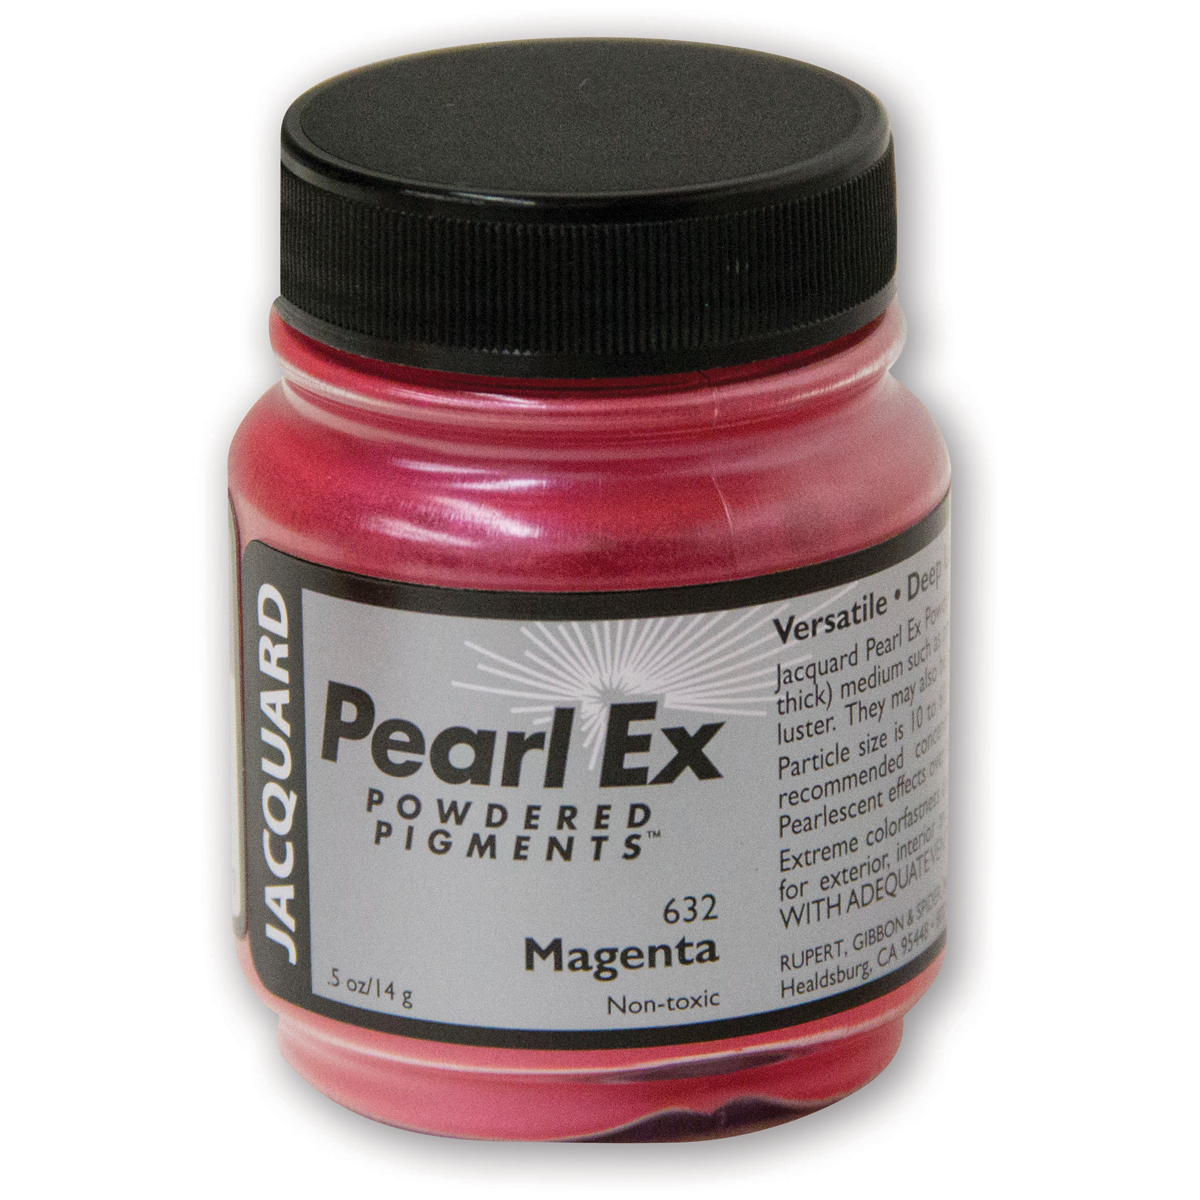 Jacquard Pearl Ex Powdered Pigment 14g-Magenta, JPX-1632 | eBay